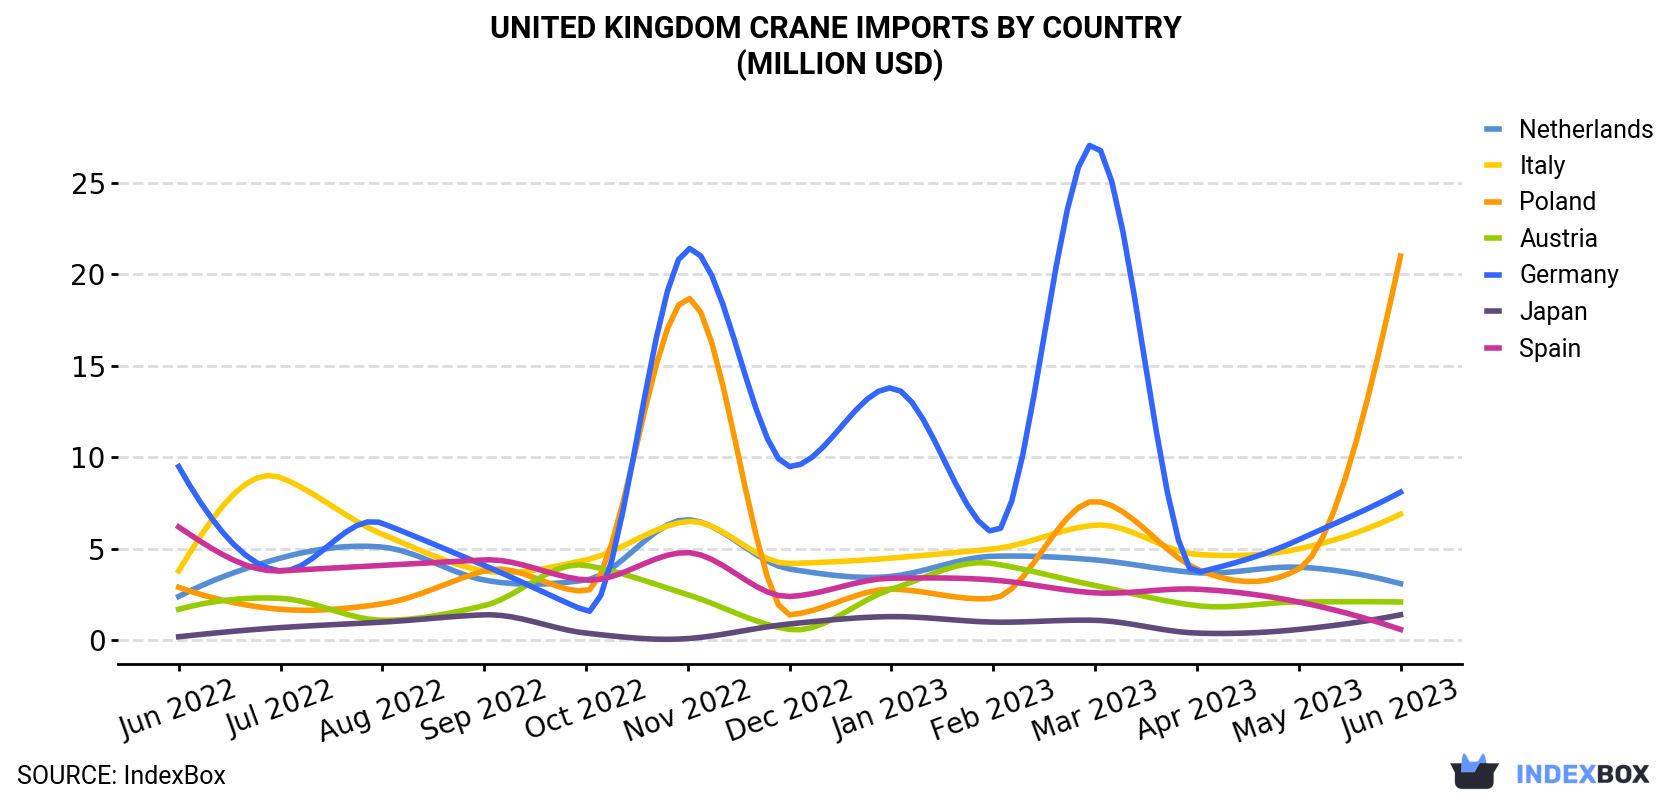 United Kingdom Crane Imports By Country (Million USD)